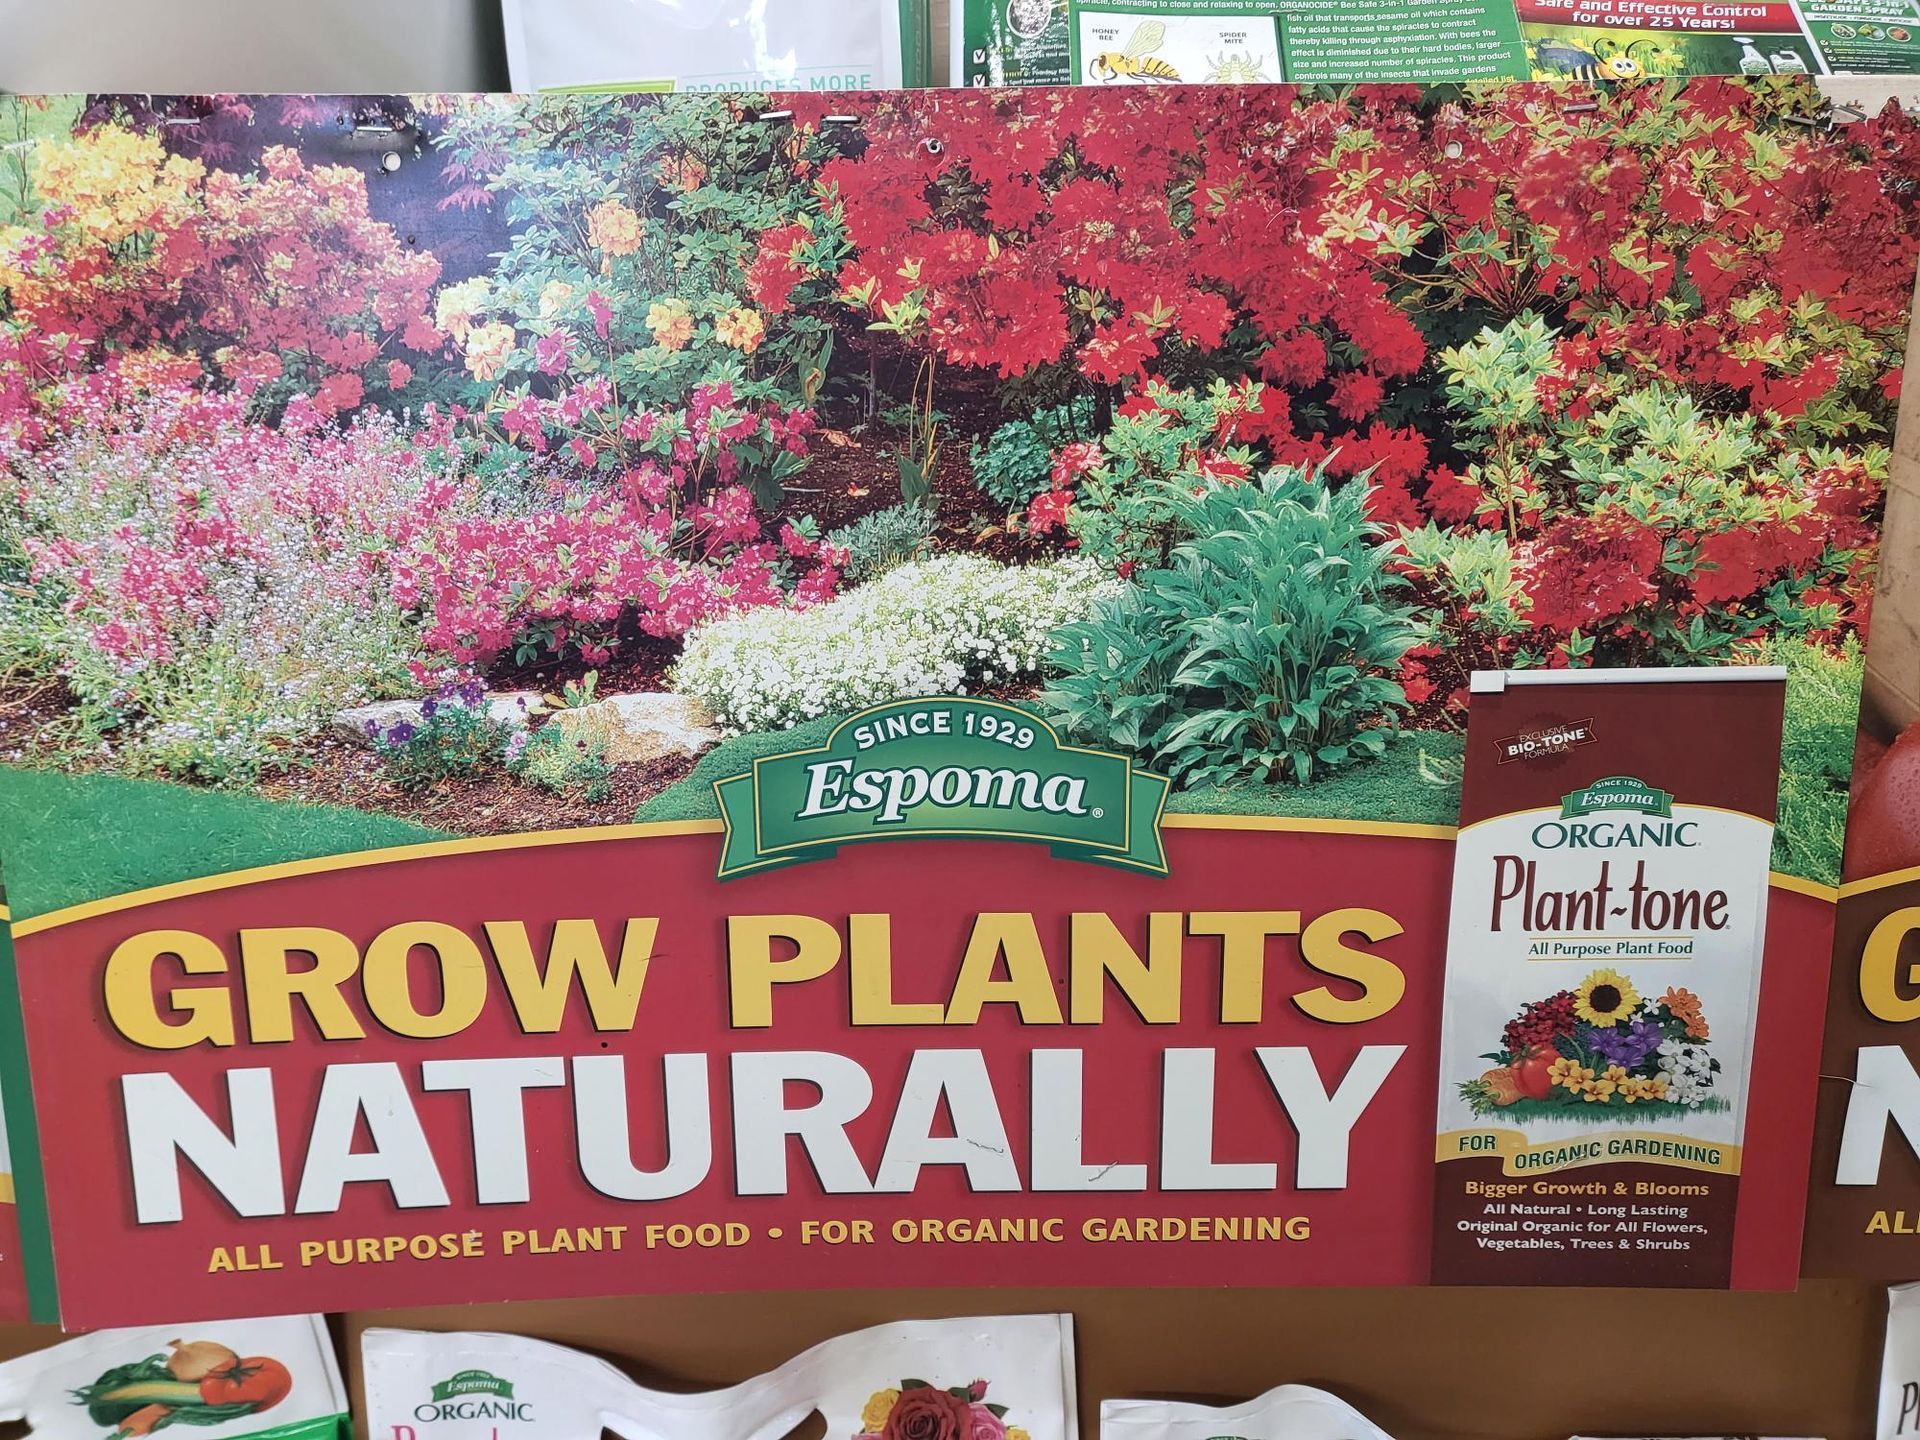 Plant-tone - All-purpose plant food